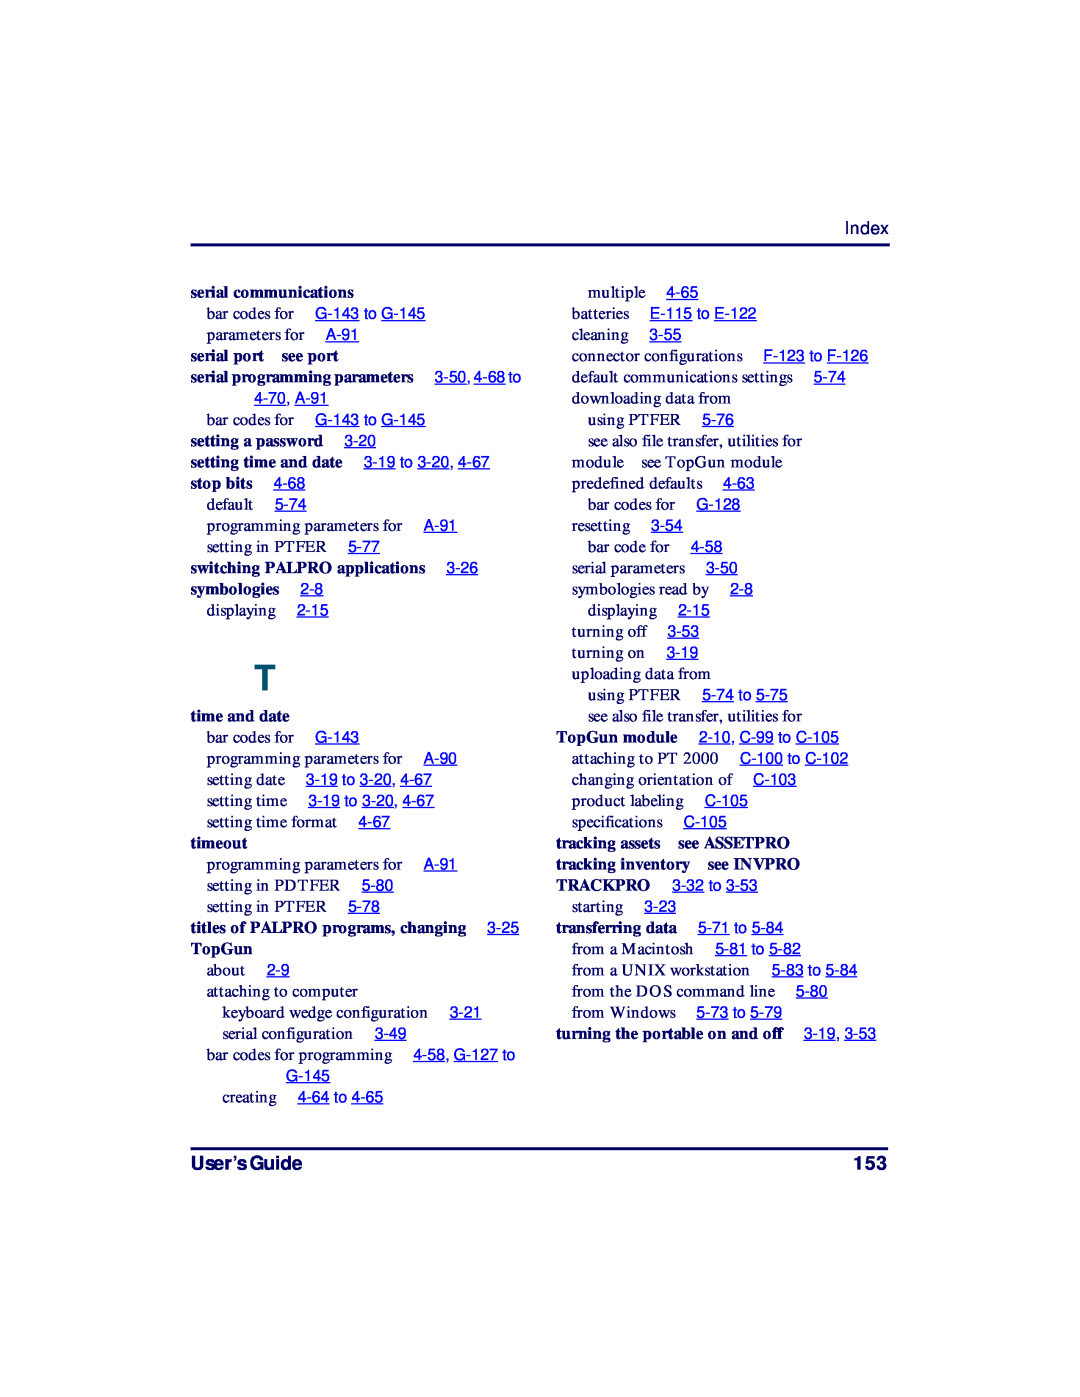 PSC PT2000, TopGun manual User’s Guide, Index, see ASSETPRO 